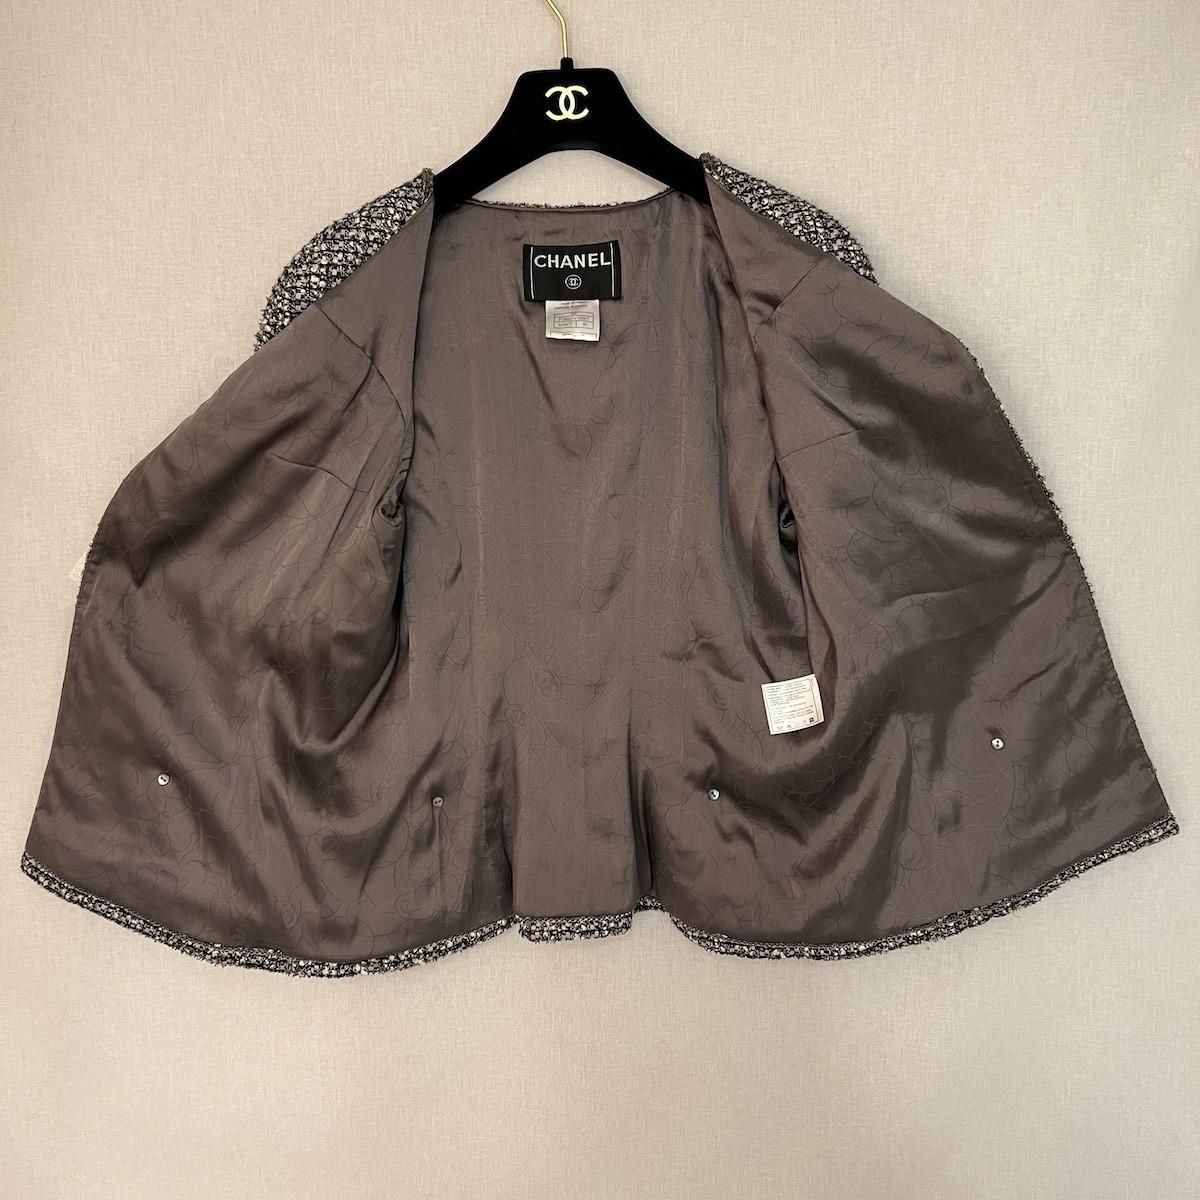 CHANEL Jacket in Grey Tweed Size 40fr 1